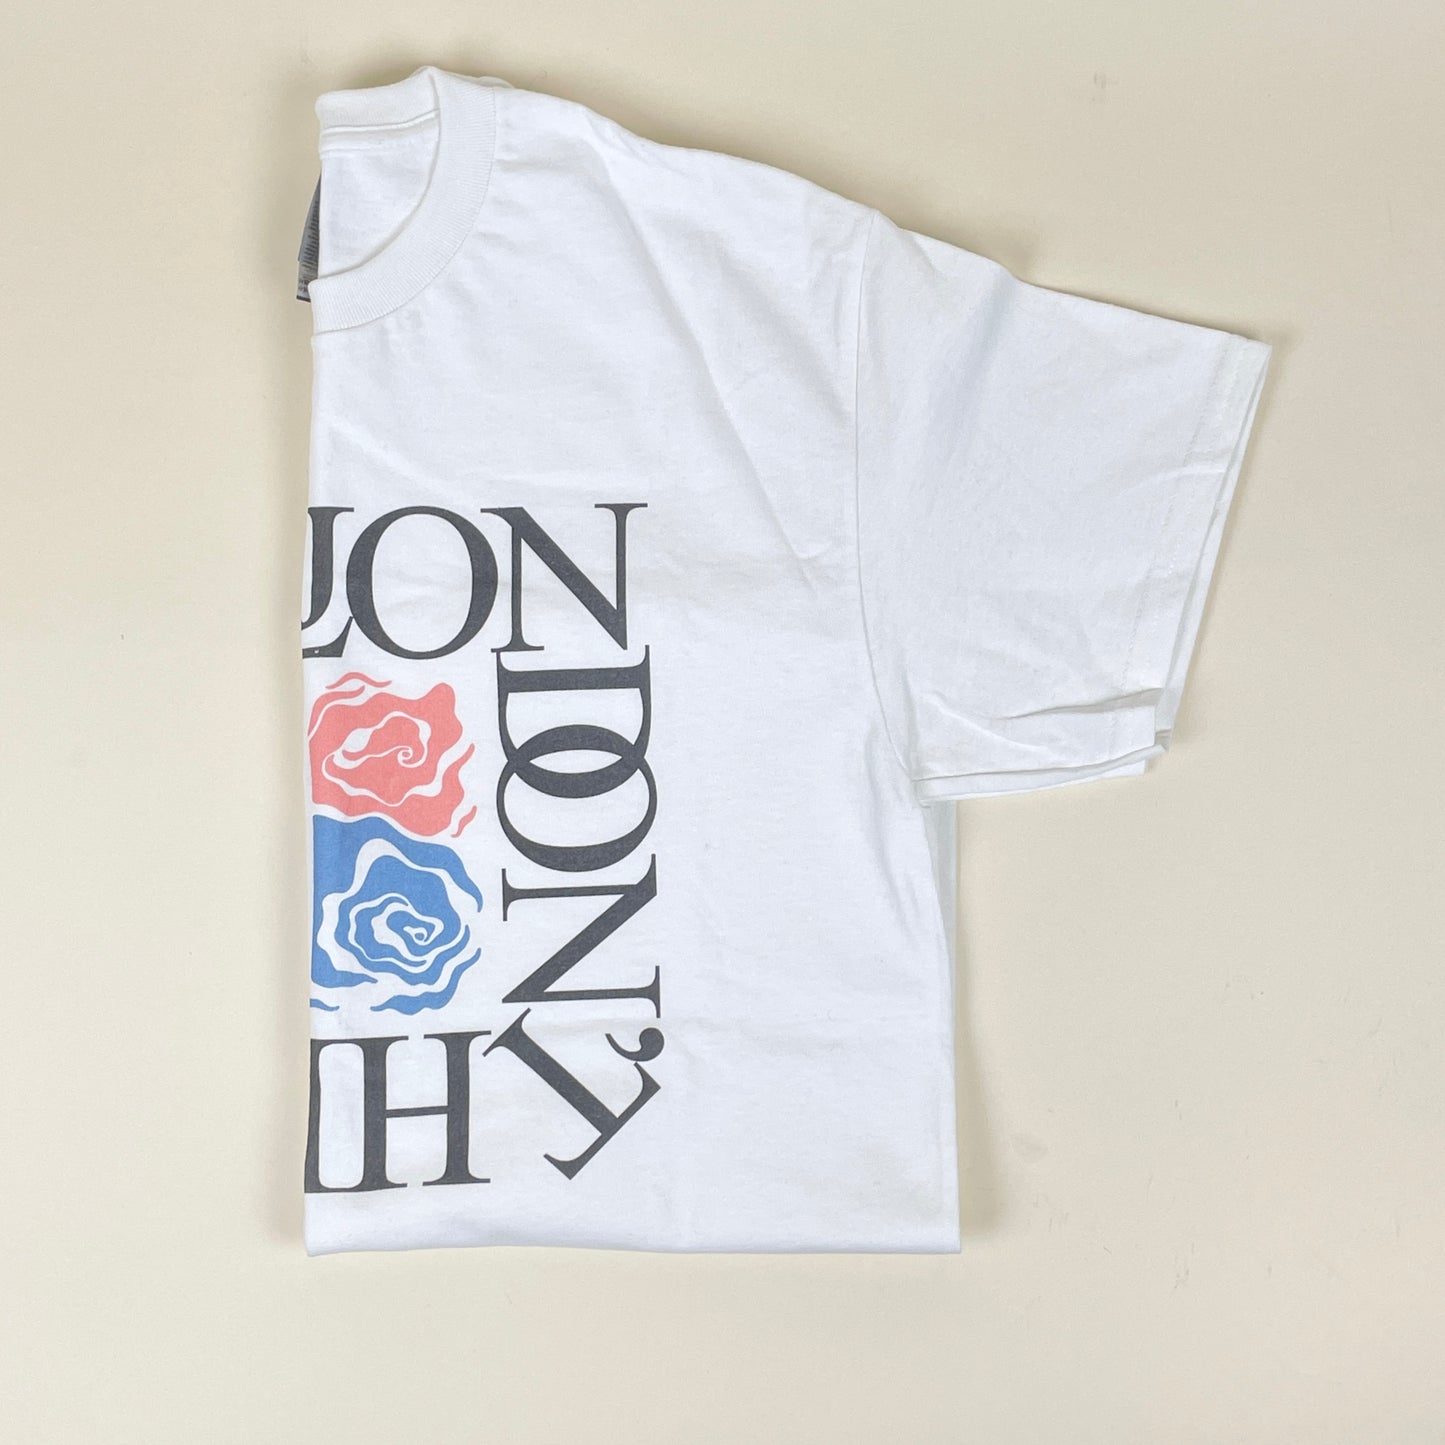 Miljon "Don't They Know" T-shirt (black or white)